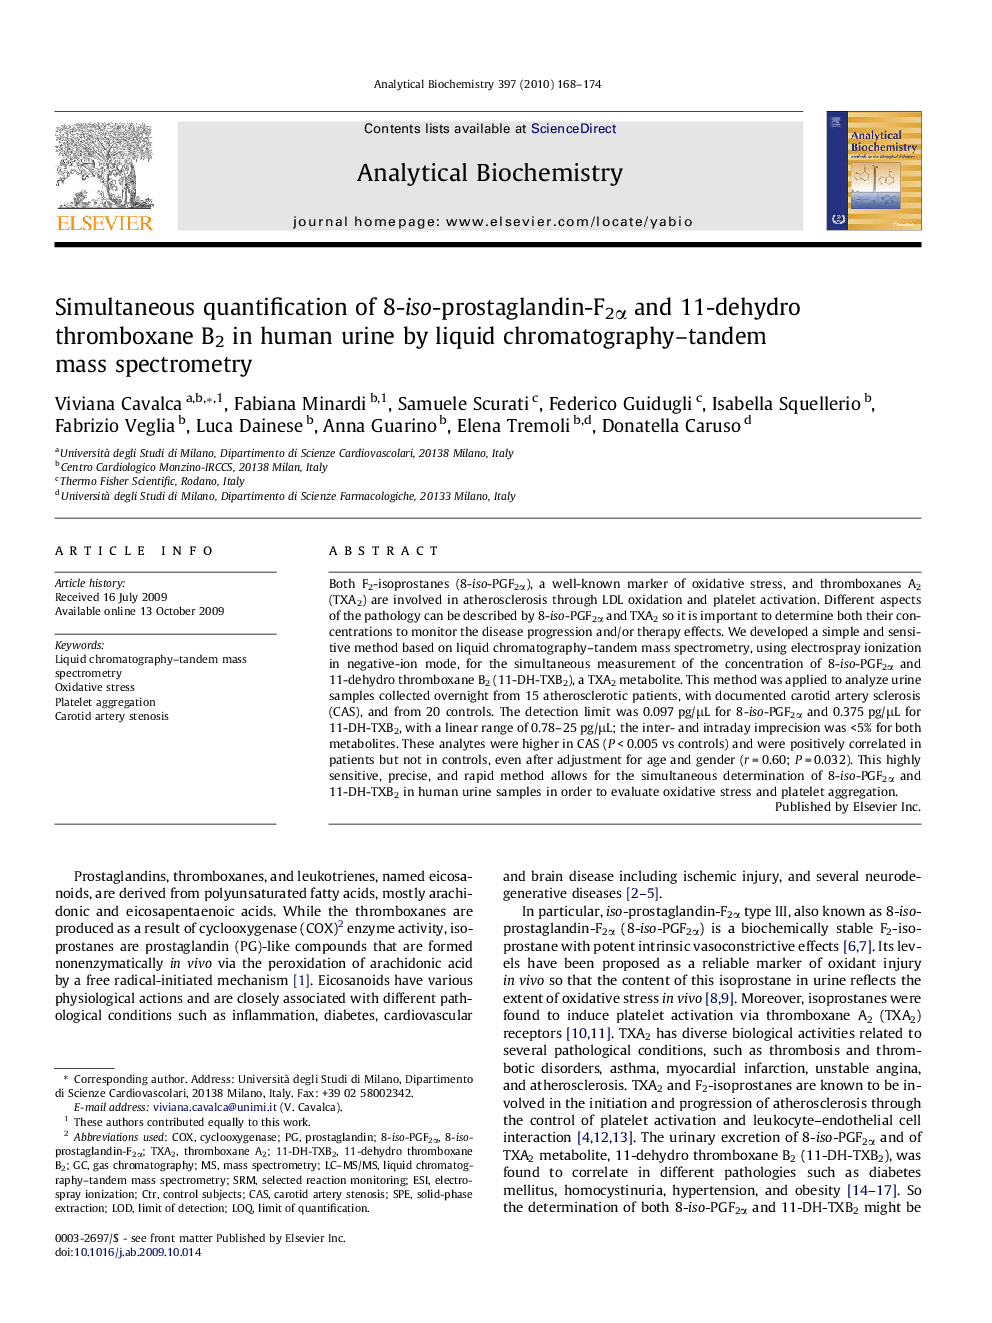 Simultaneous quantification of 8-iso-prostaglandin-F2Î± and 11-dehydro thromboxane B2 in human urine by liquid chromatography-tandem mass spectrometry